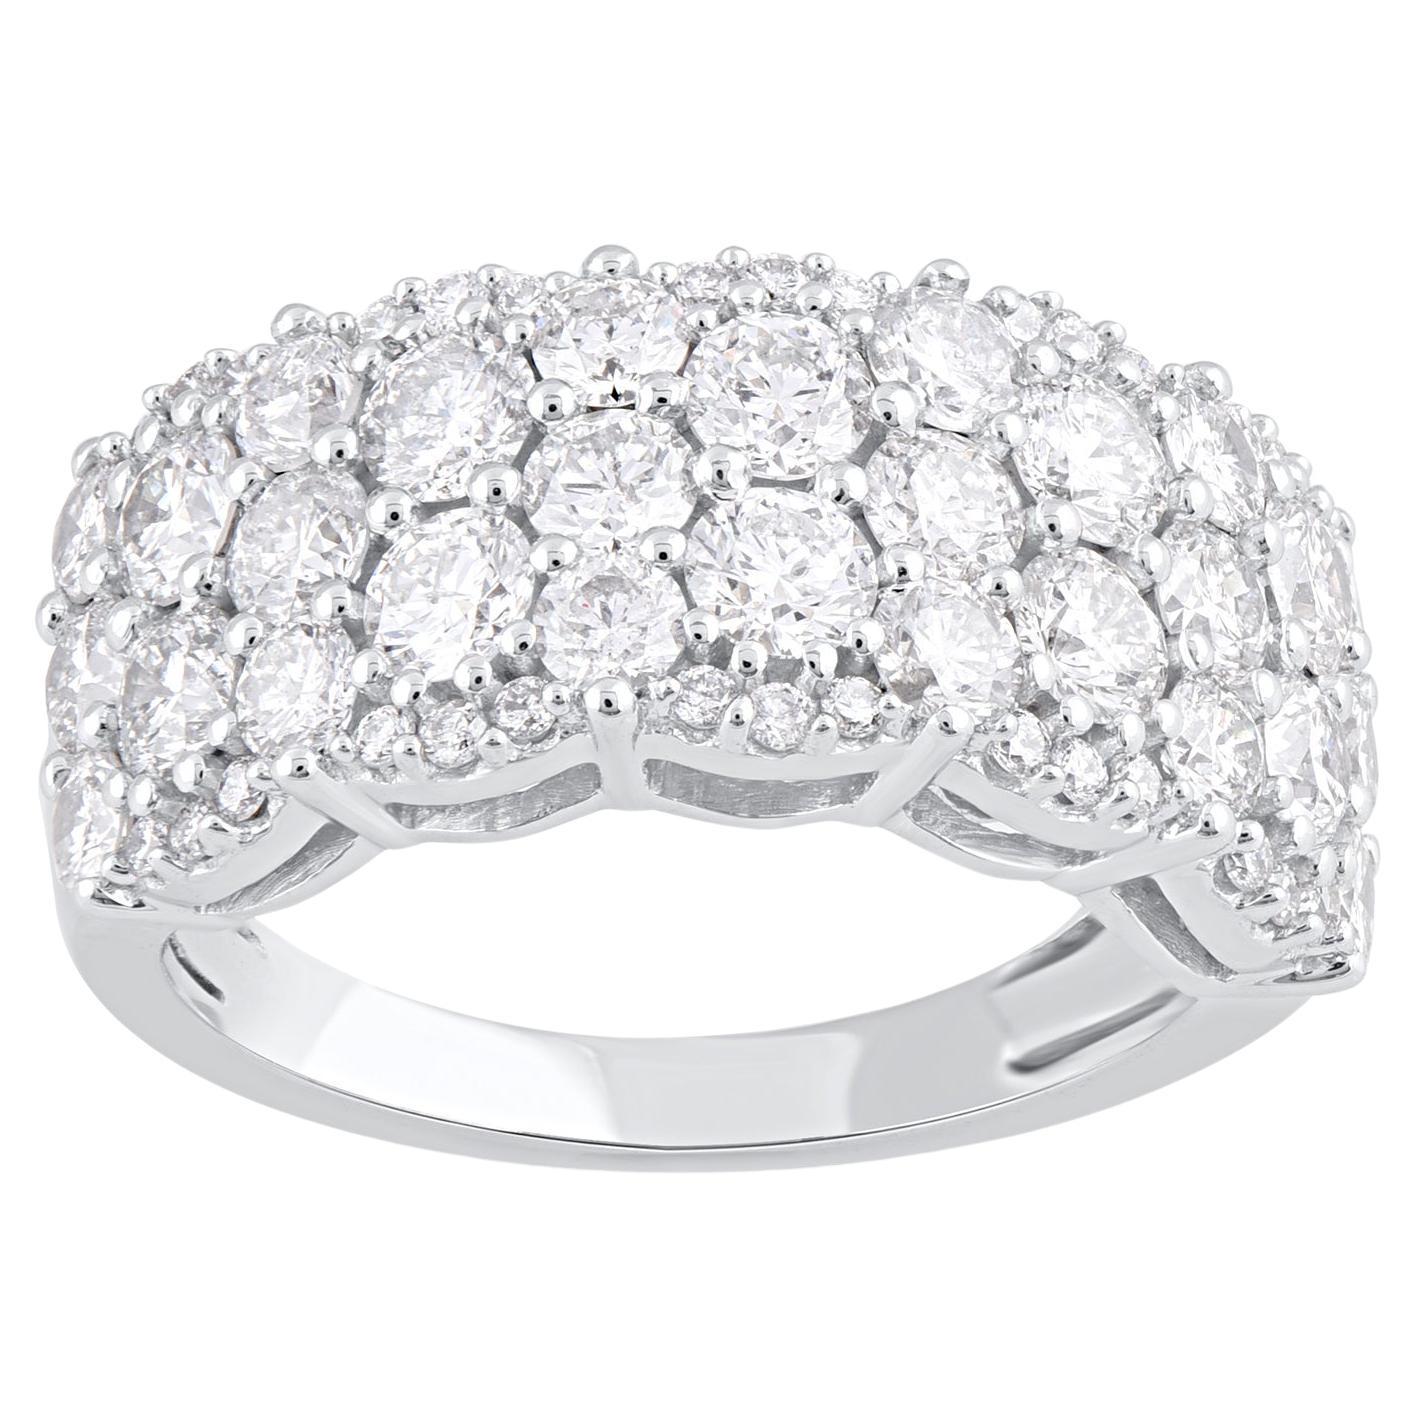 TJD 3.0 Carat Brilliant Cut Diamond 14 Karat White Gold Wedding Band Ring